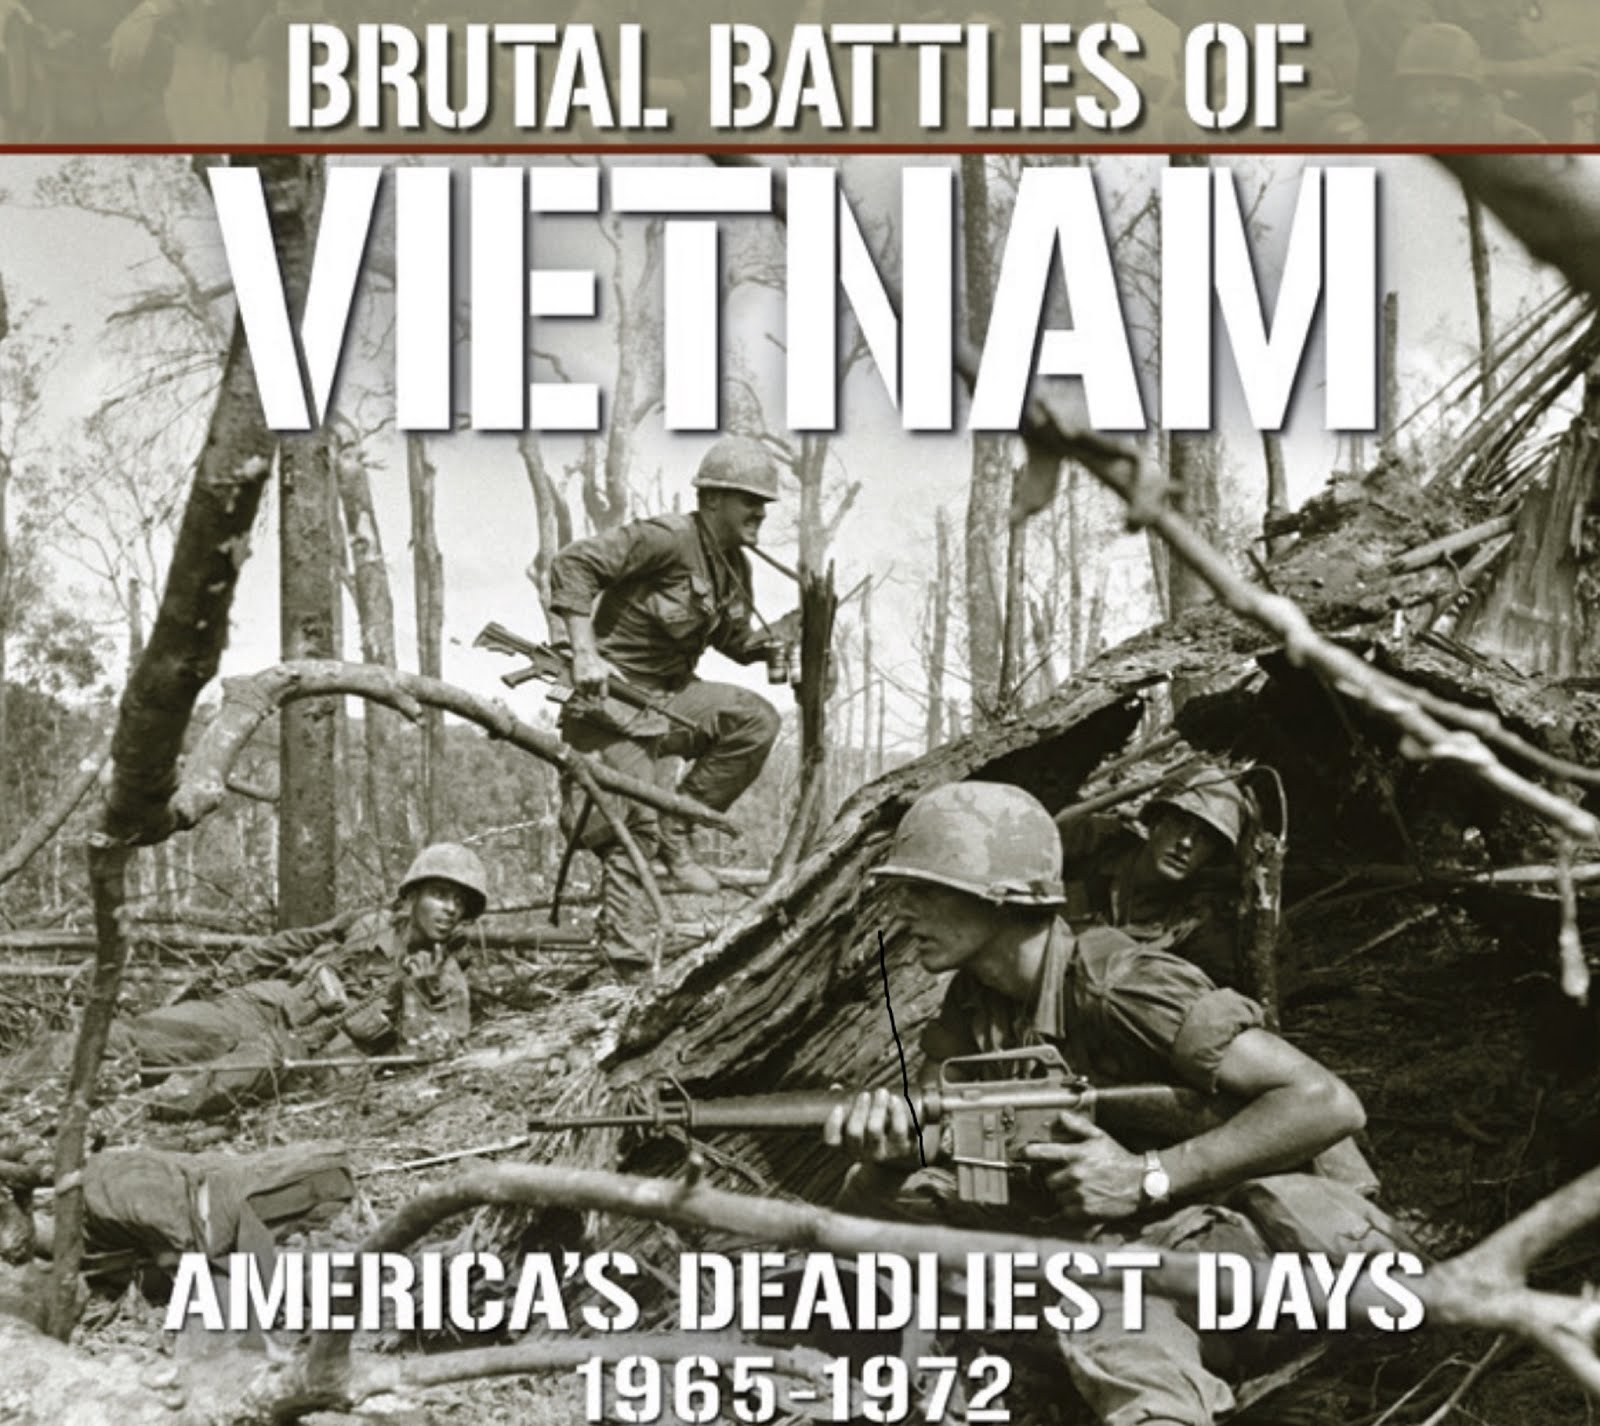 BRUTAL BATTLES OF VIETNAM